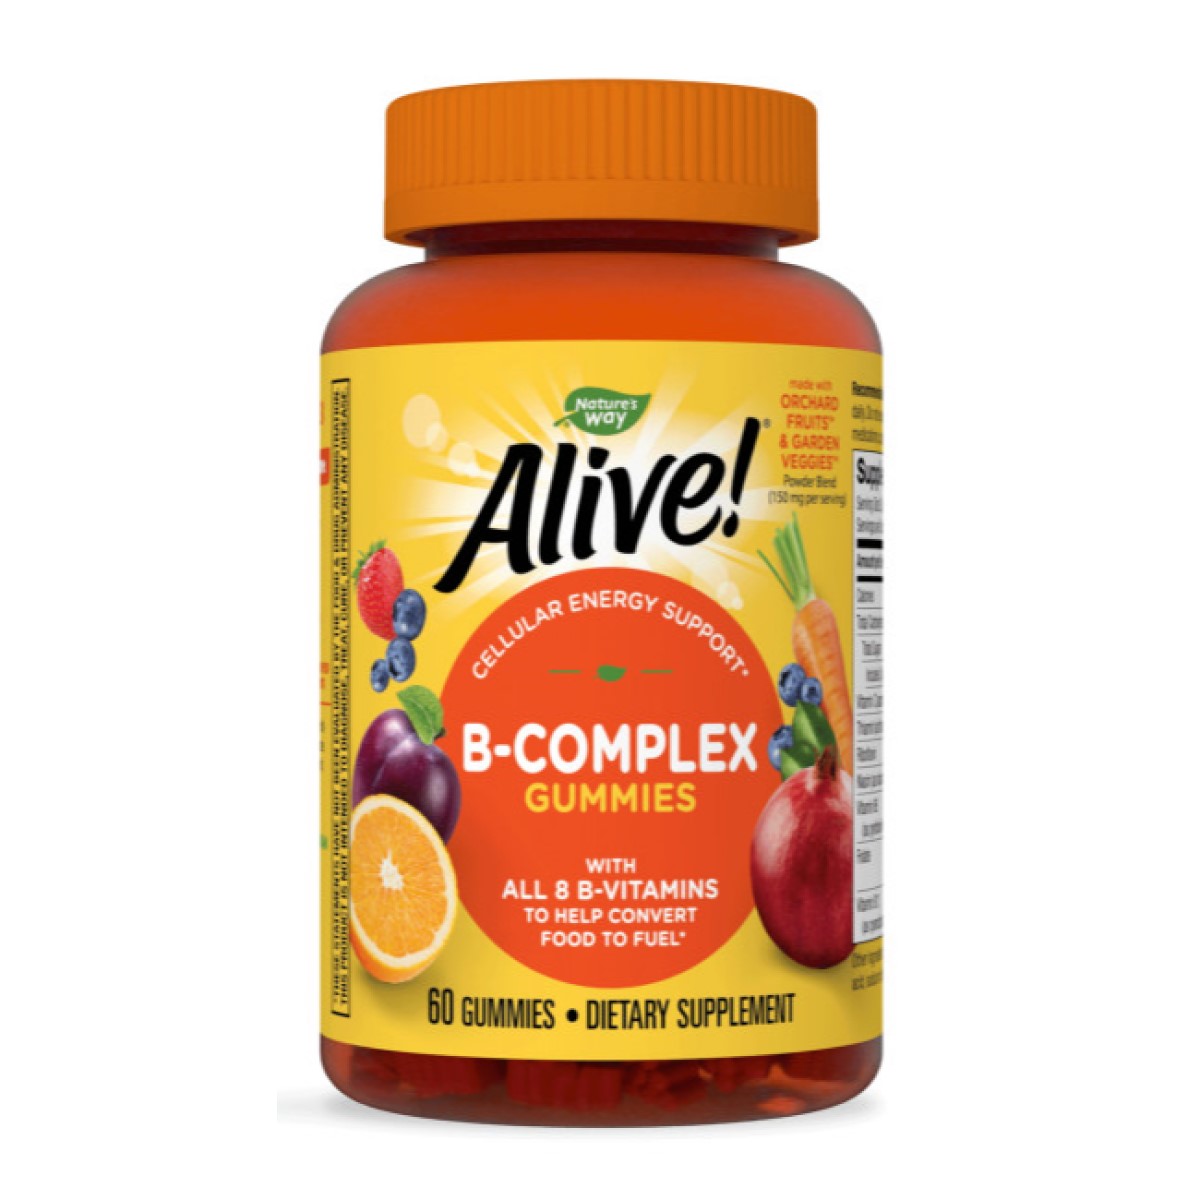 Primary image of Alive! B-Complex Gummy Vitamins